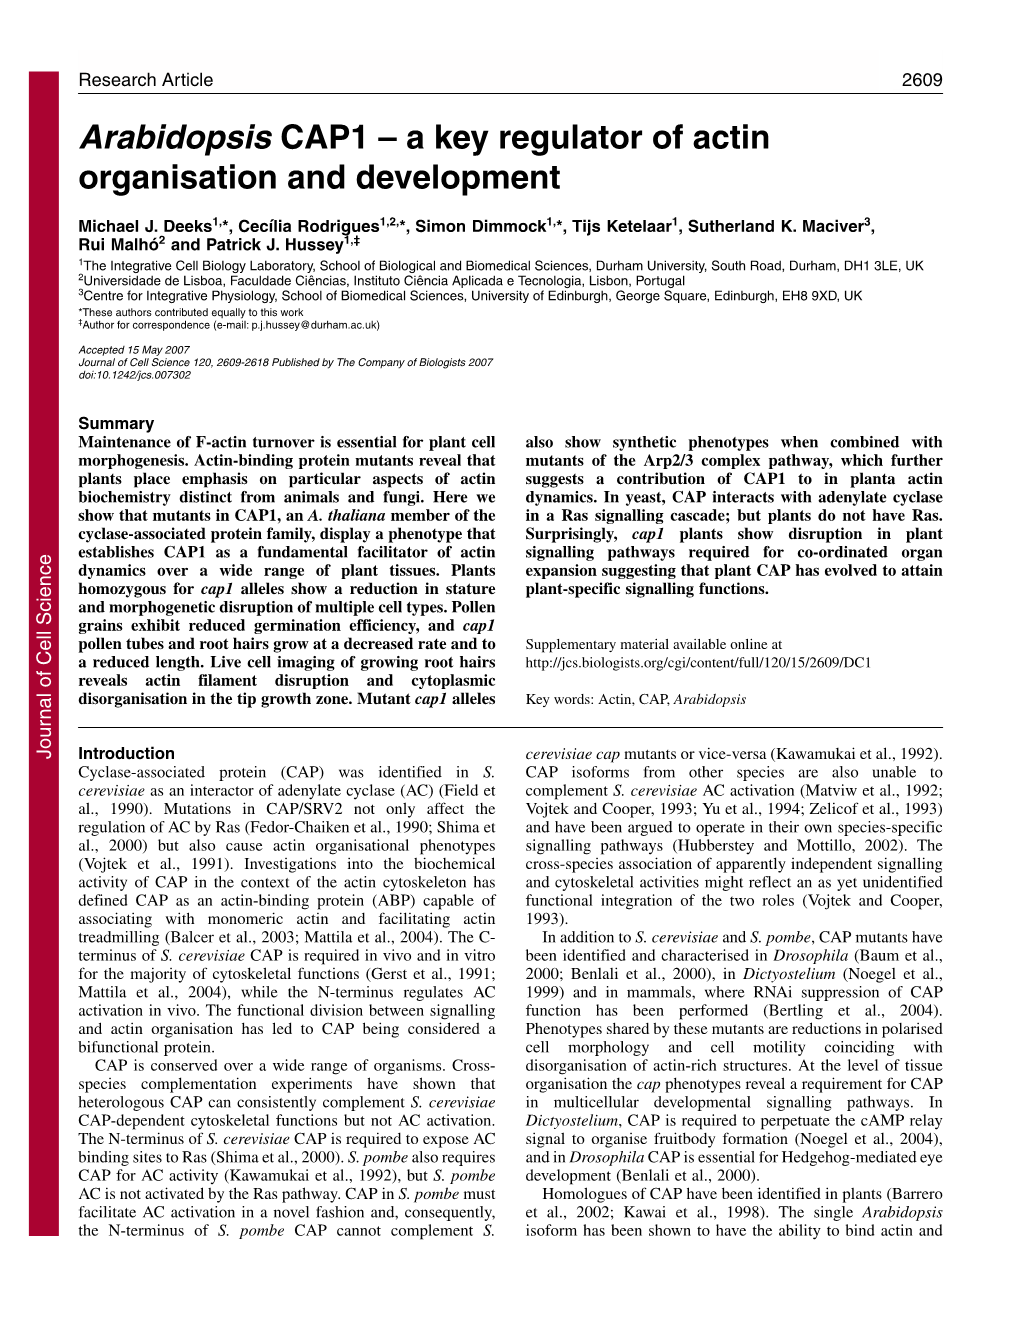 Arabidopsis CAP1 – a Key Regulator of Actin Organisation and Development